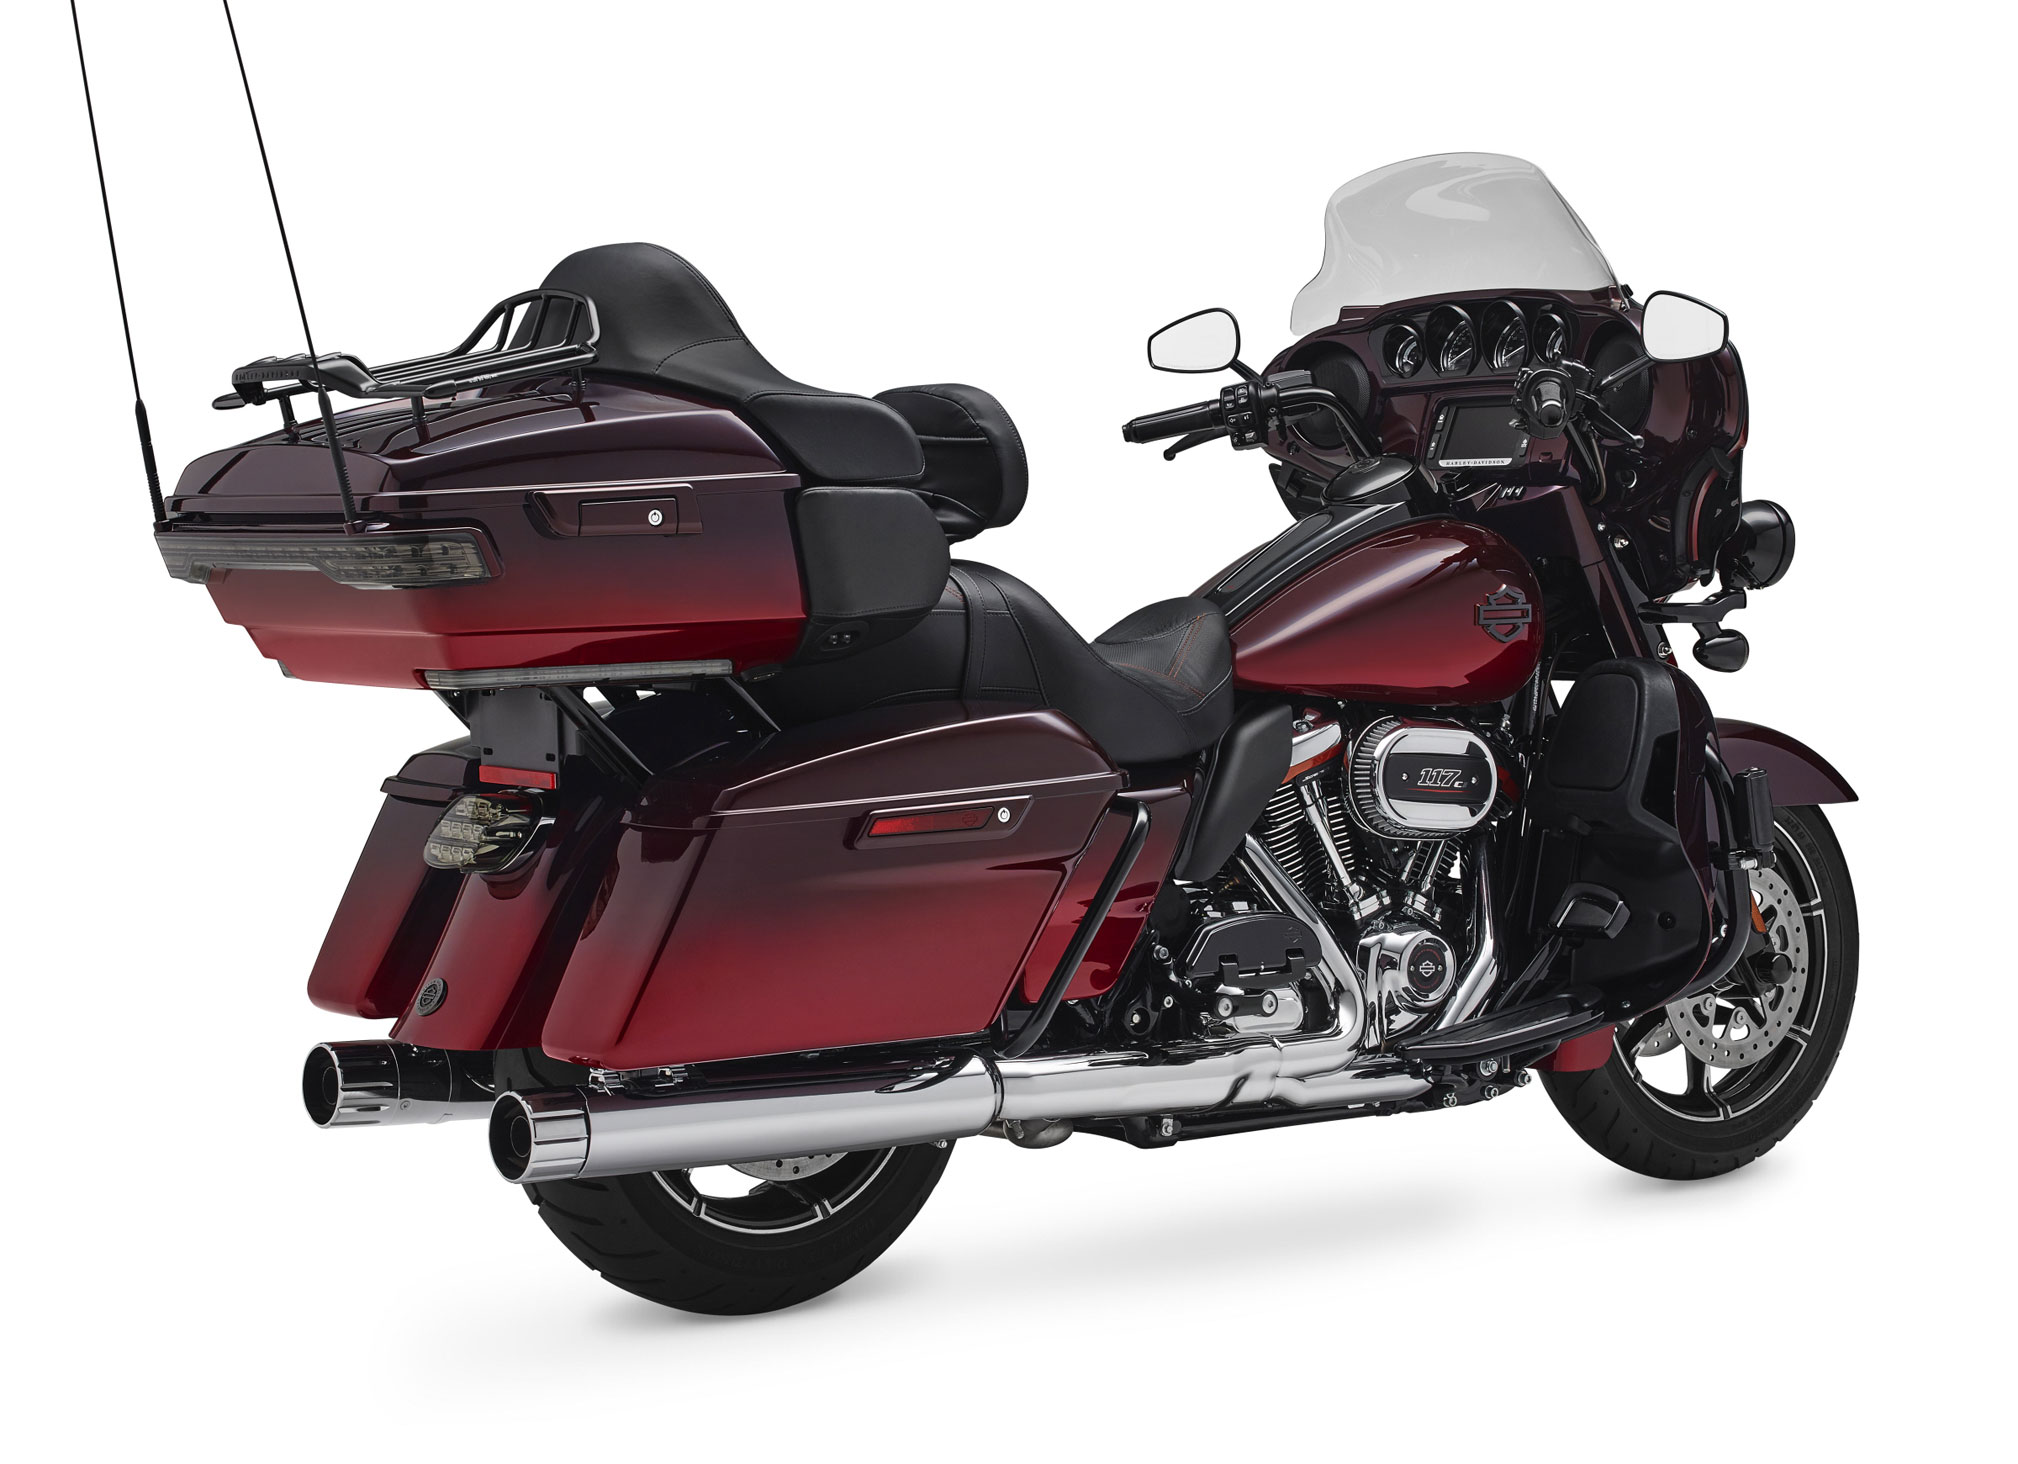 Harley Davidson Limited Edition Cvo 2020 Price Promotion Off55